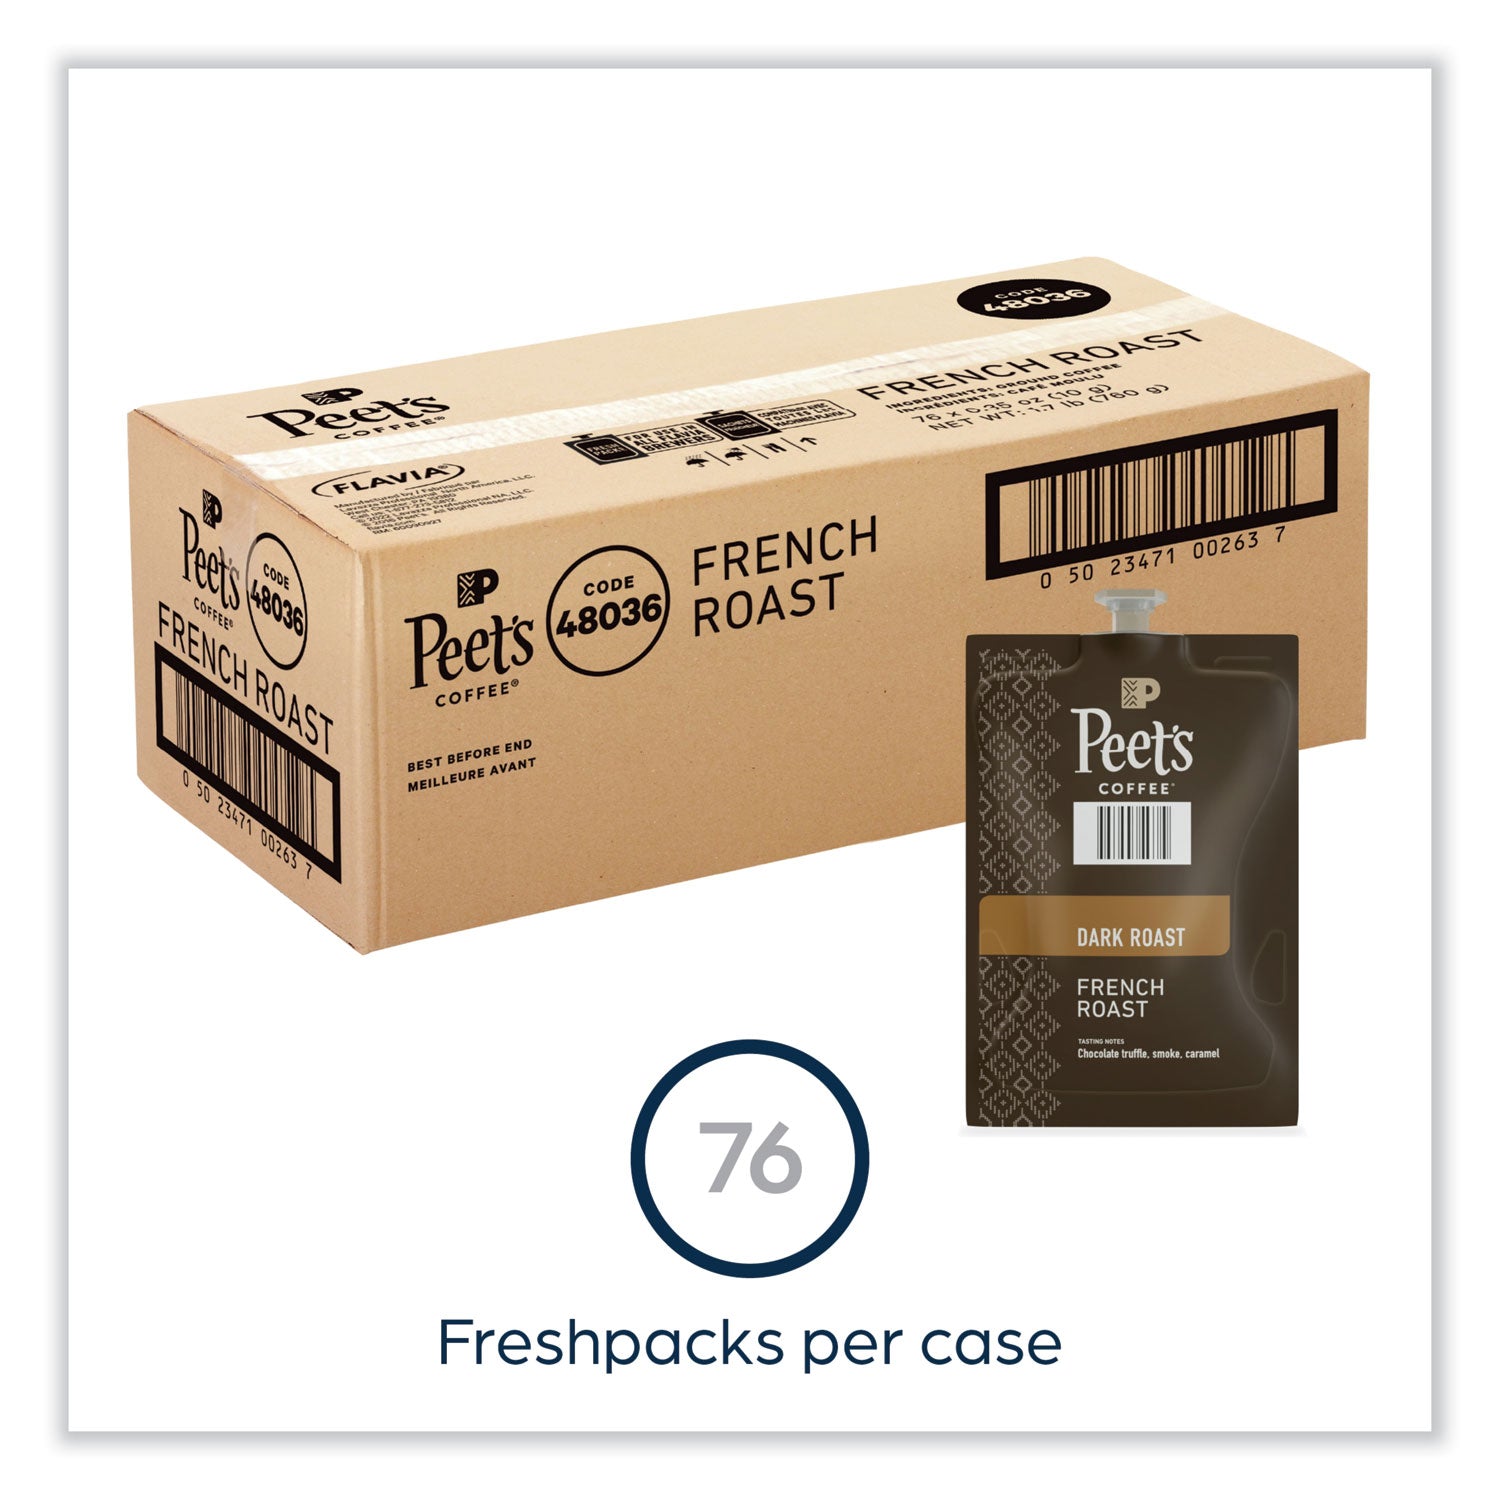 flavia-ground-coffee-freshpacks-french-roast-035-oz-freshpack-76-carton_peelpc00263 - 5